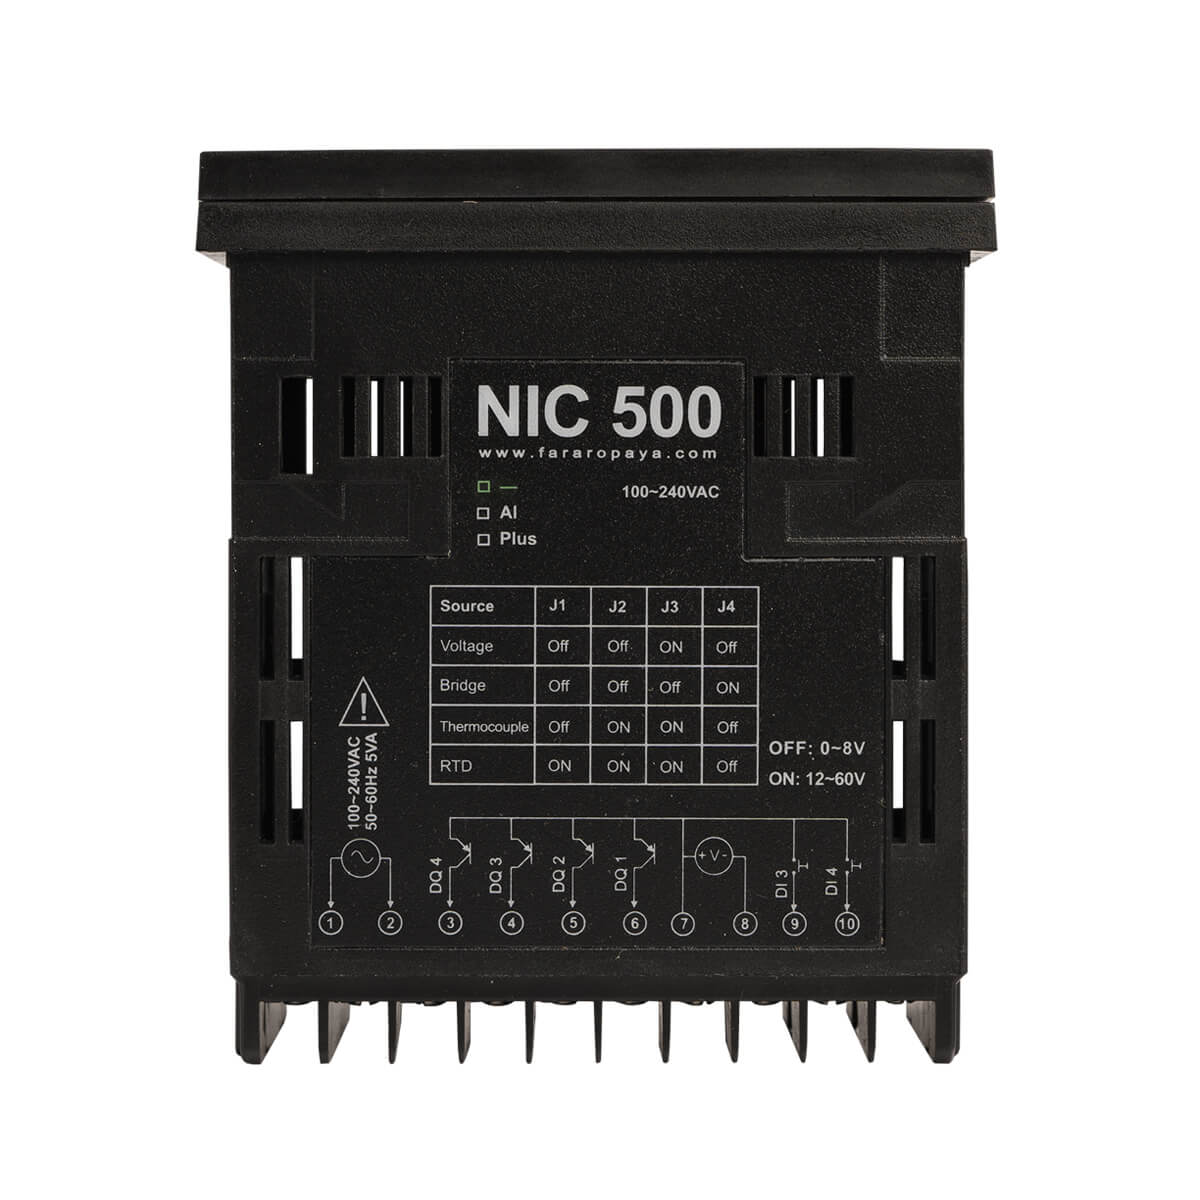 nic500-back1